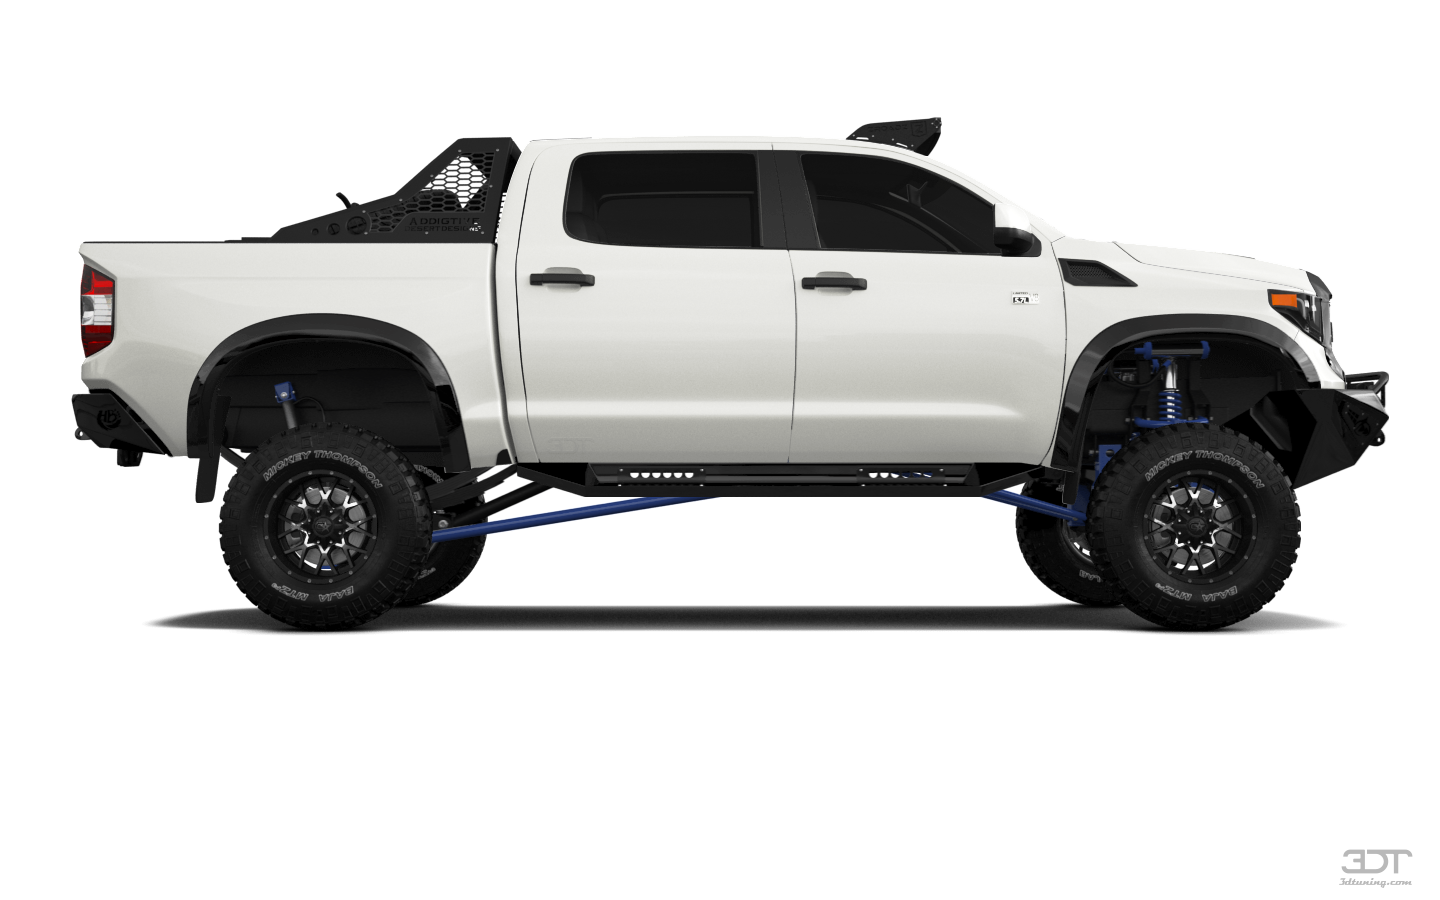 Toyota Tundra 4 Door pickup truck 2018